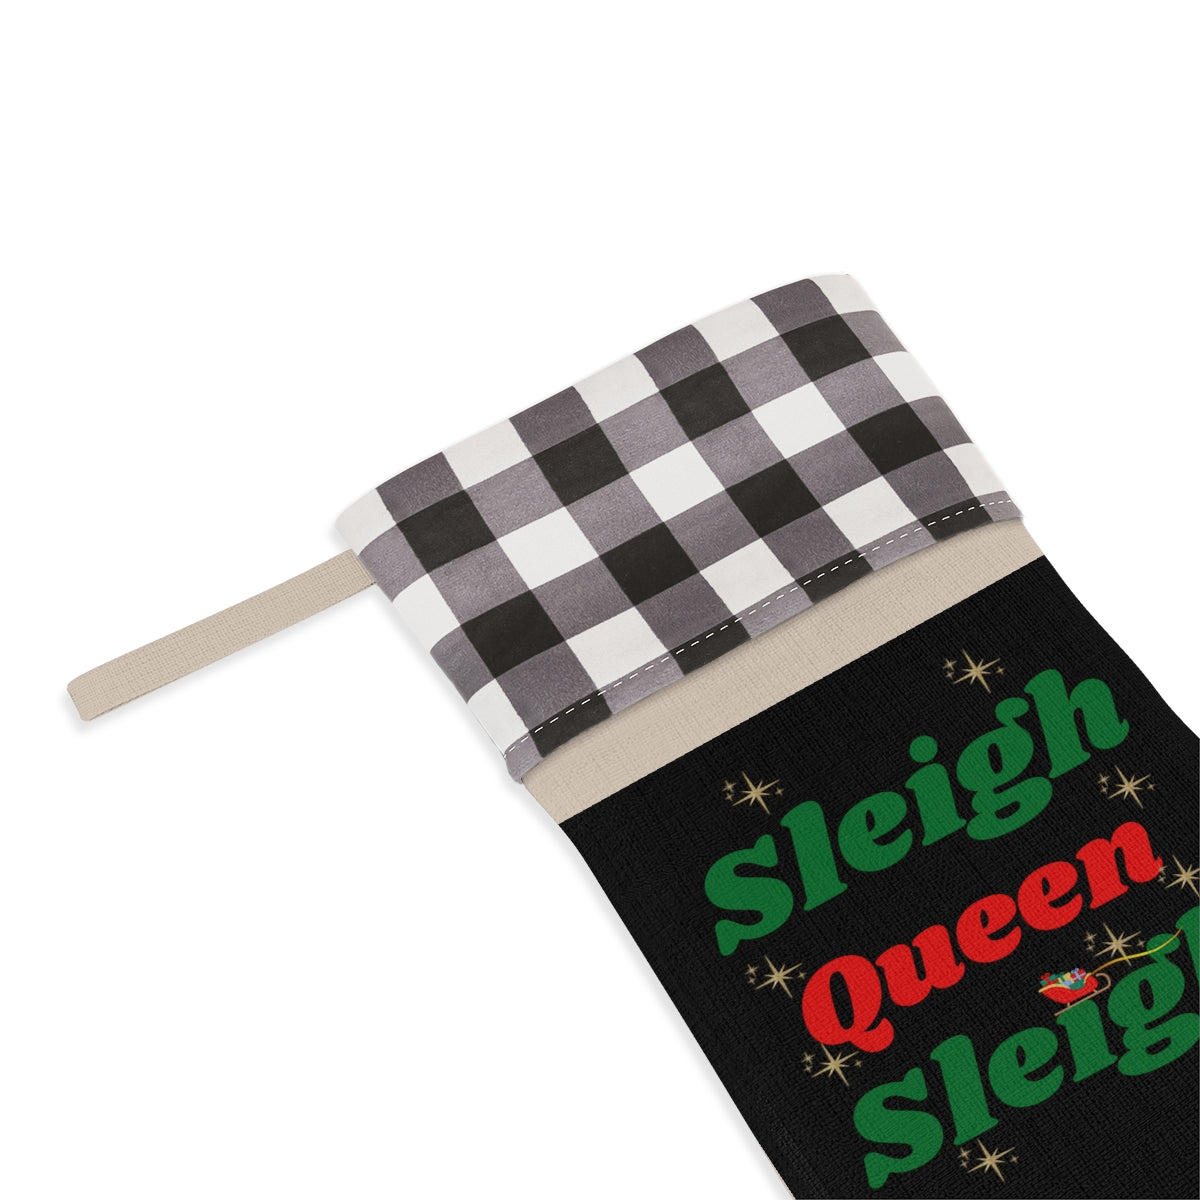 Sleigh Queen Sleigh (Black) Christmas Stocking